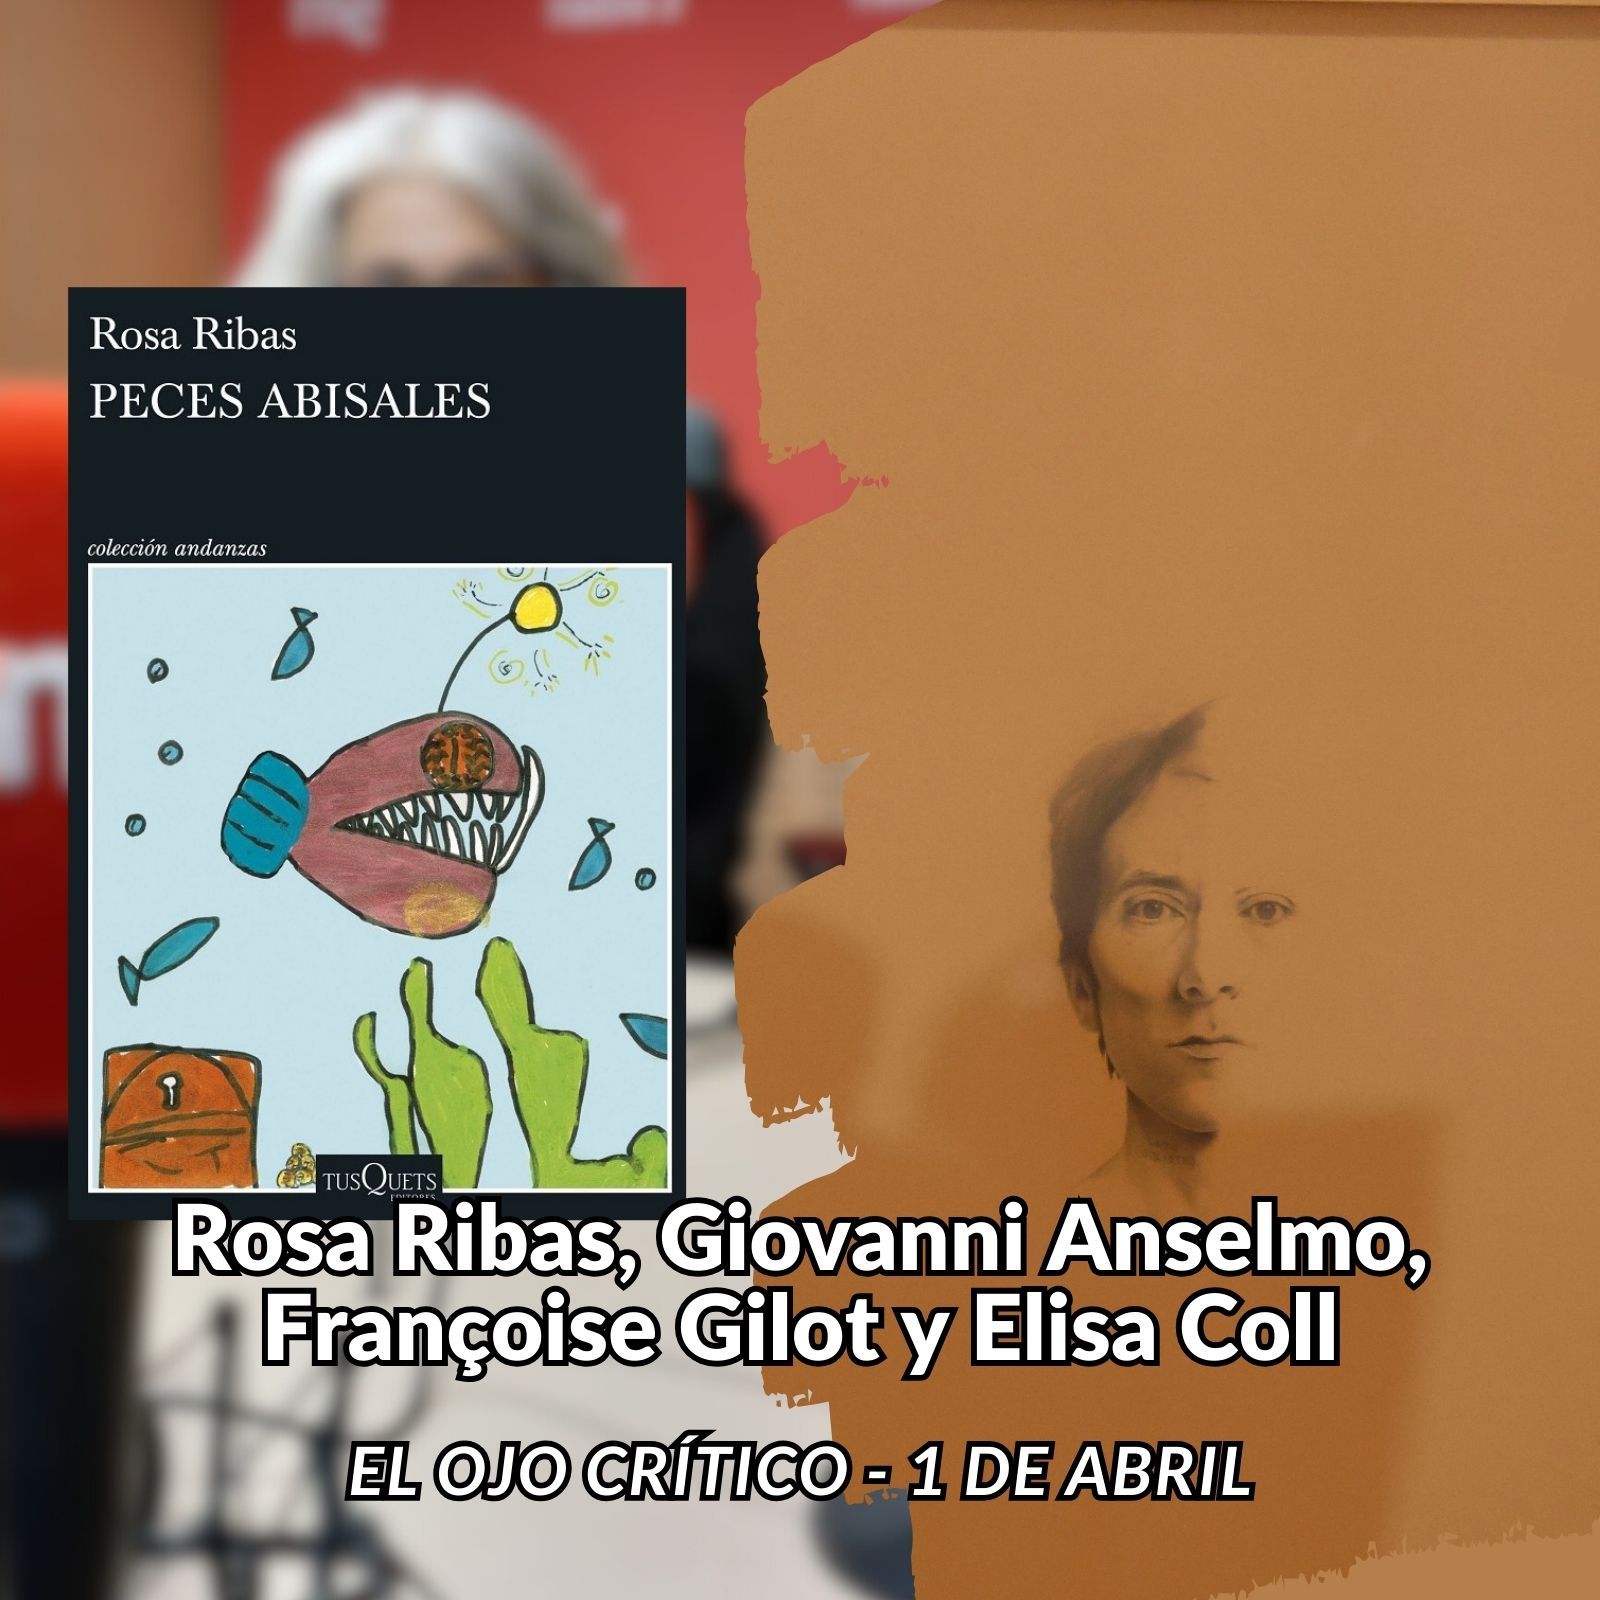 El ojo crítico - Rosa Ribas, Giovanni Anselmo, Françoise Gilot y Elisa Coll